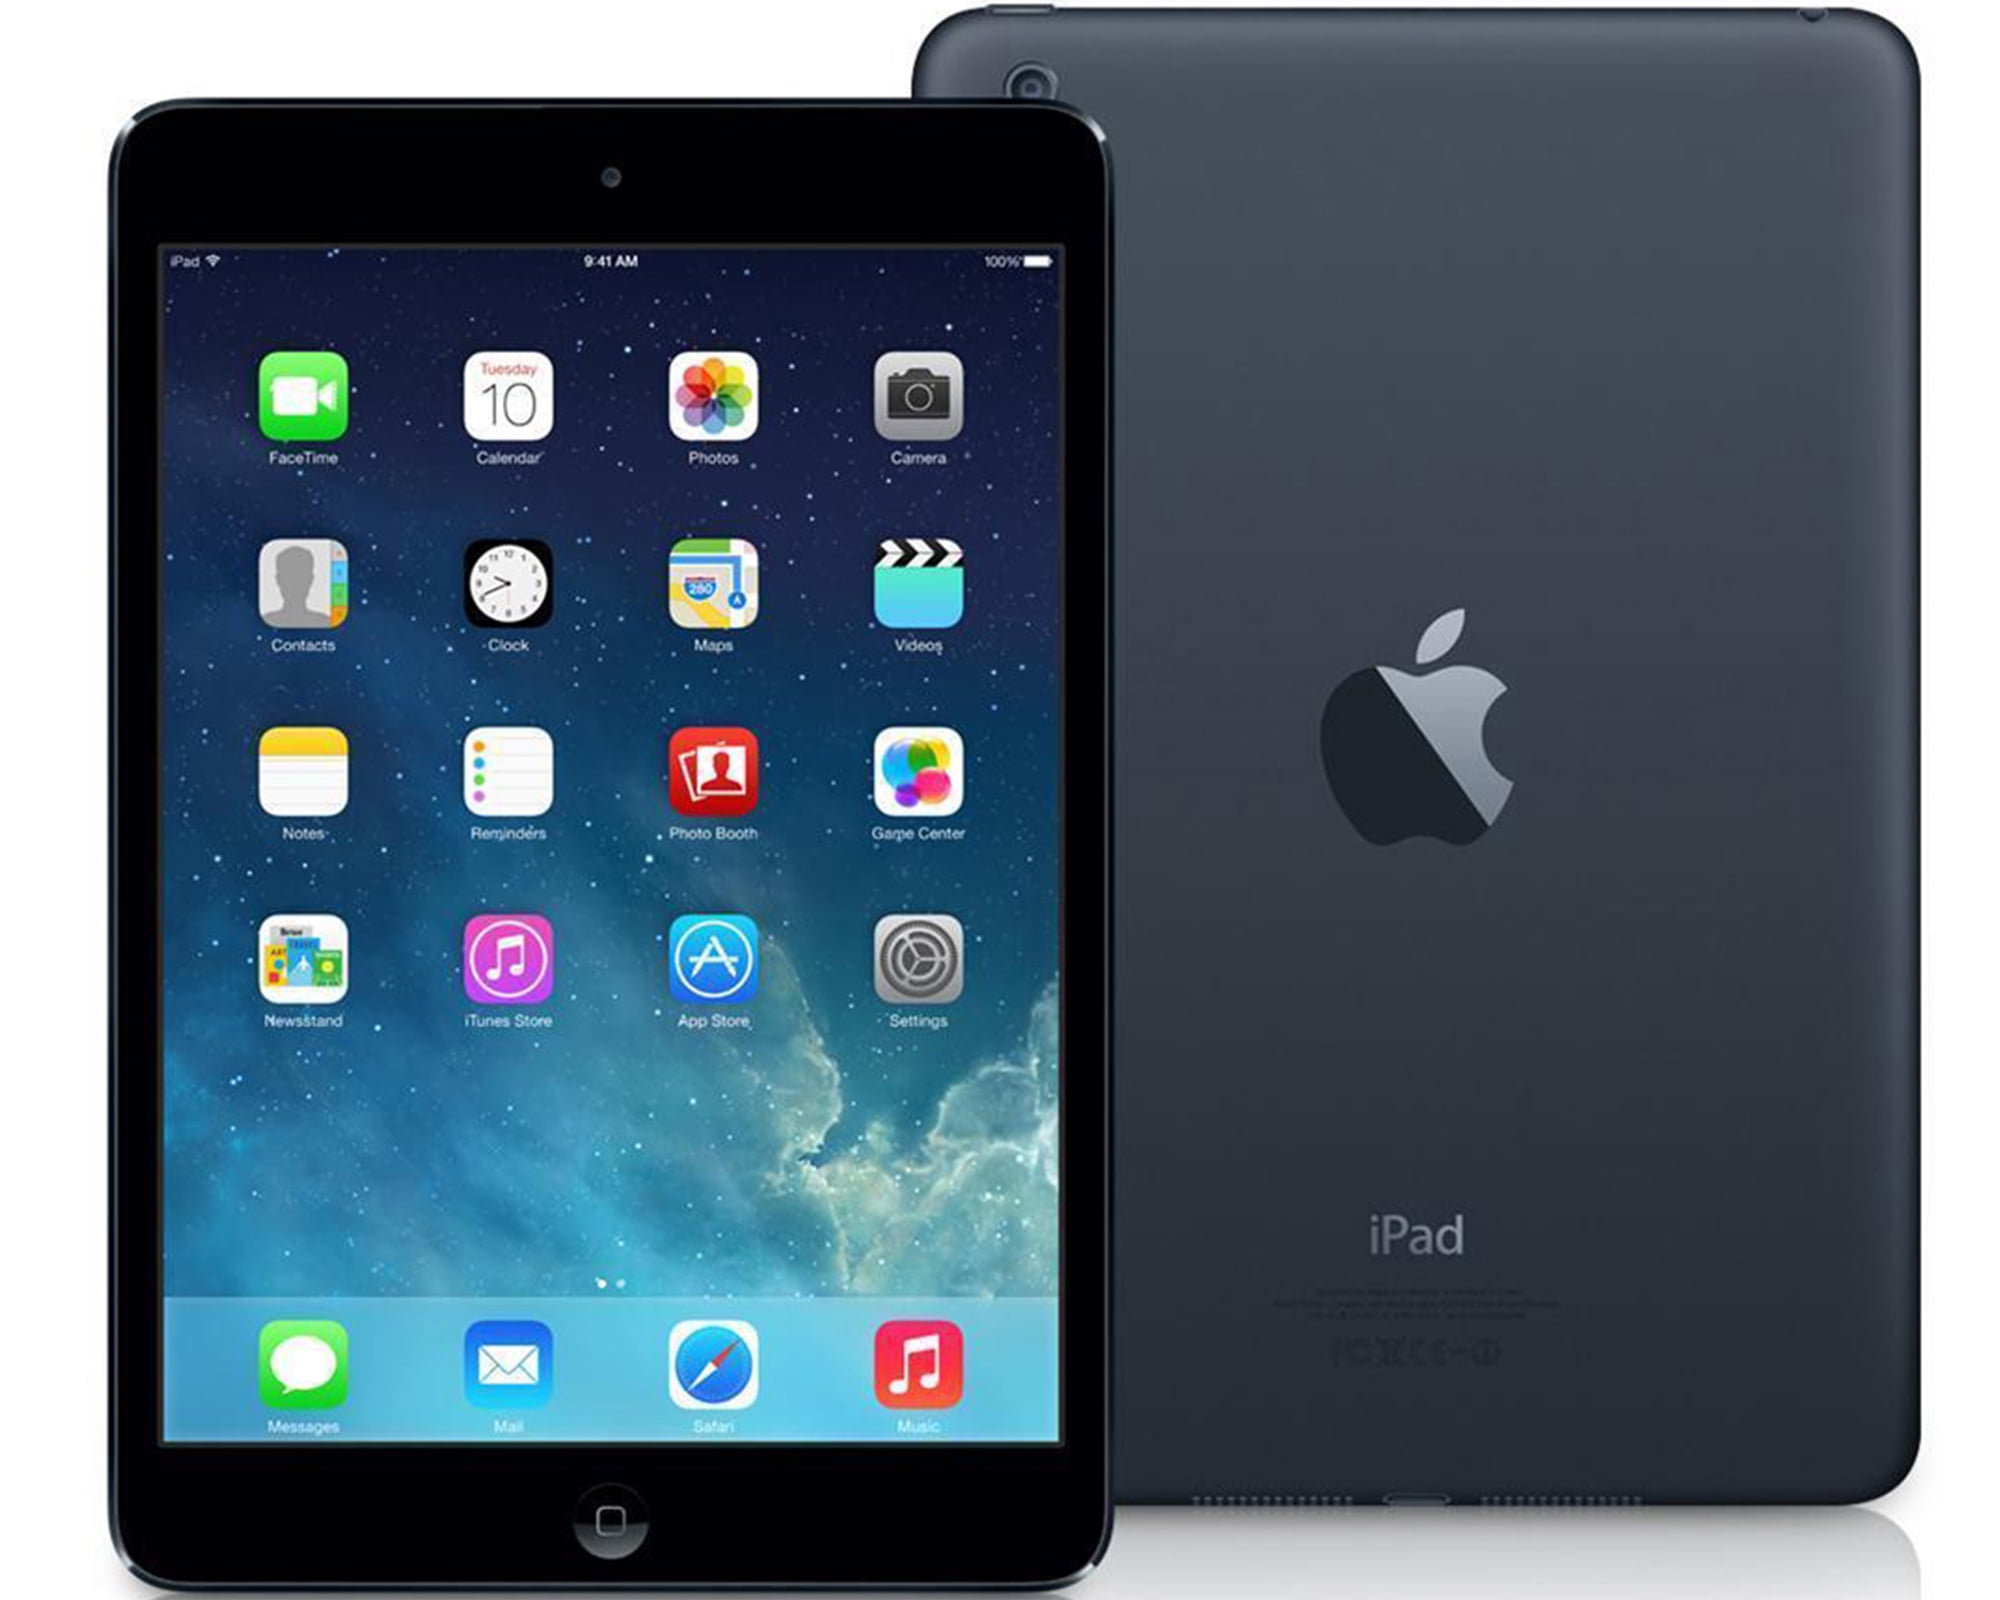 hed Hav Pind Restored Apple A1432 iPad Mini 16 GB 7.9" Multi-Touch Display Multimedia  Tablet, Black (Refurbished) - Walmart.com